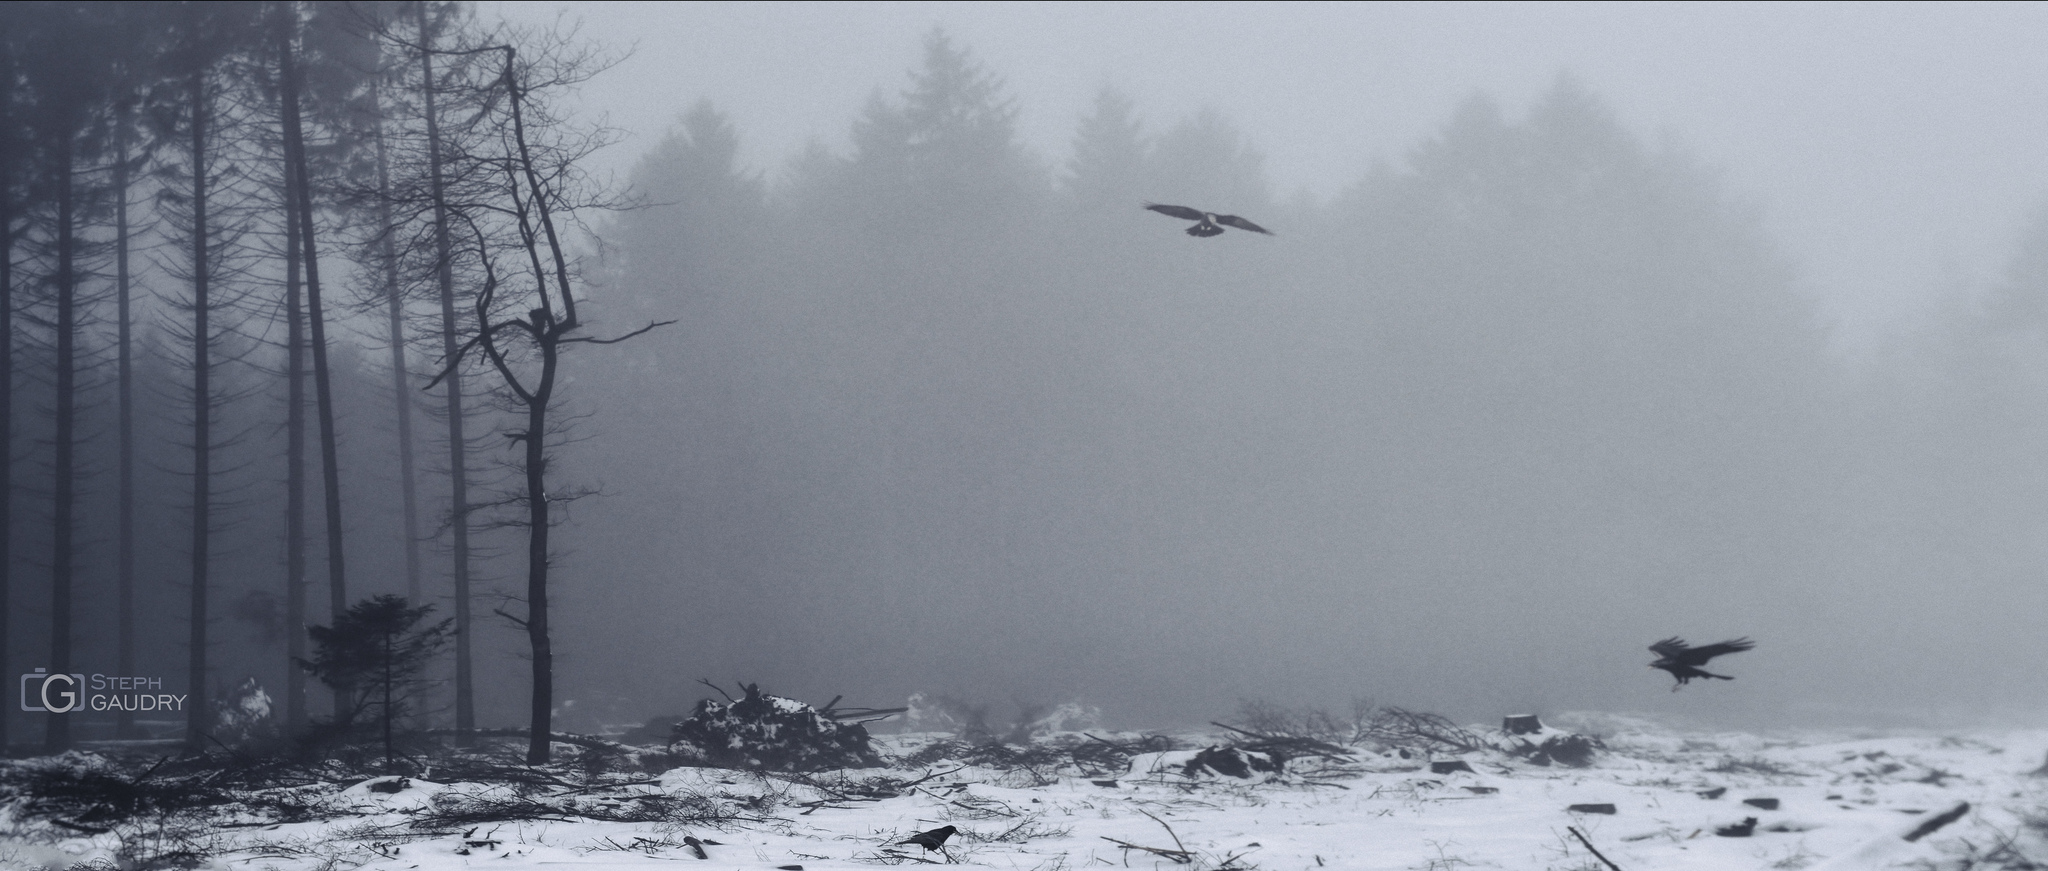 Crows in the mist - Xhoris [Klik om de diavoorstelling te starten]